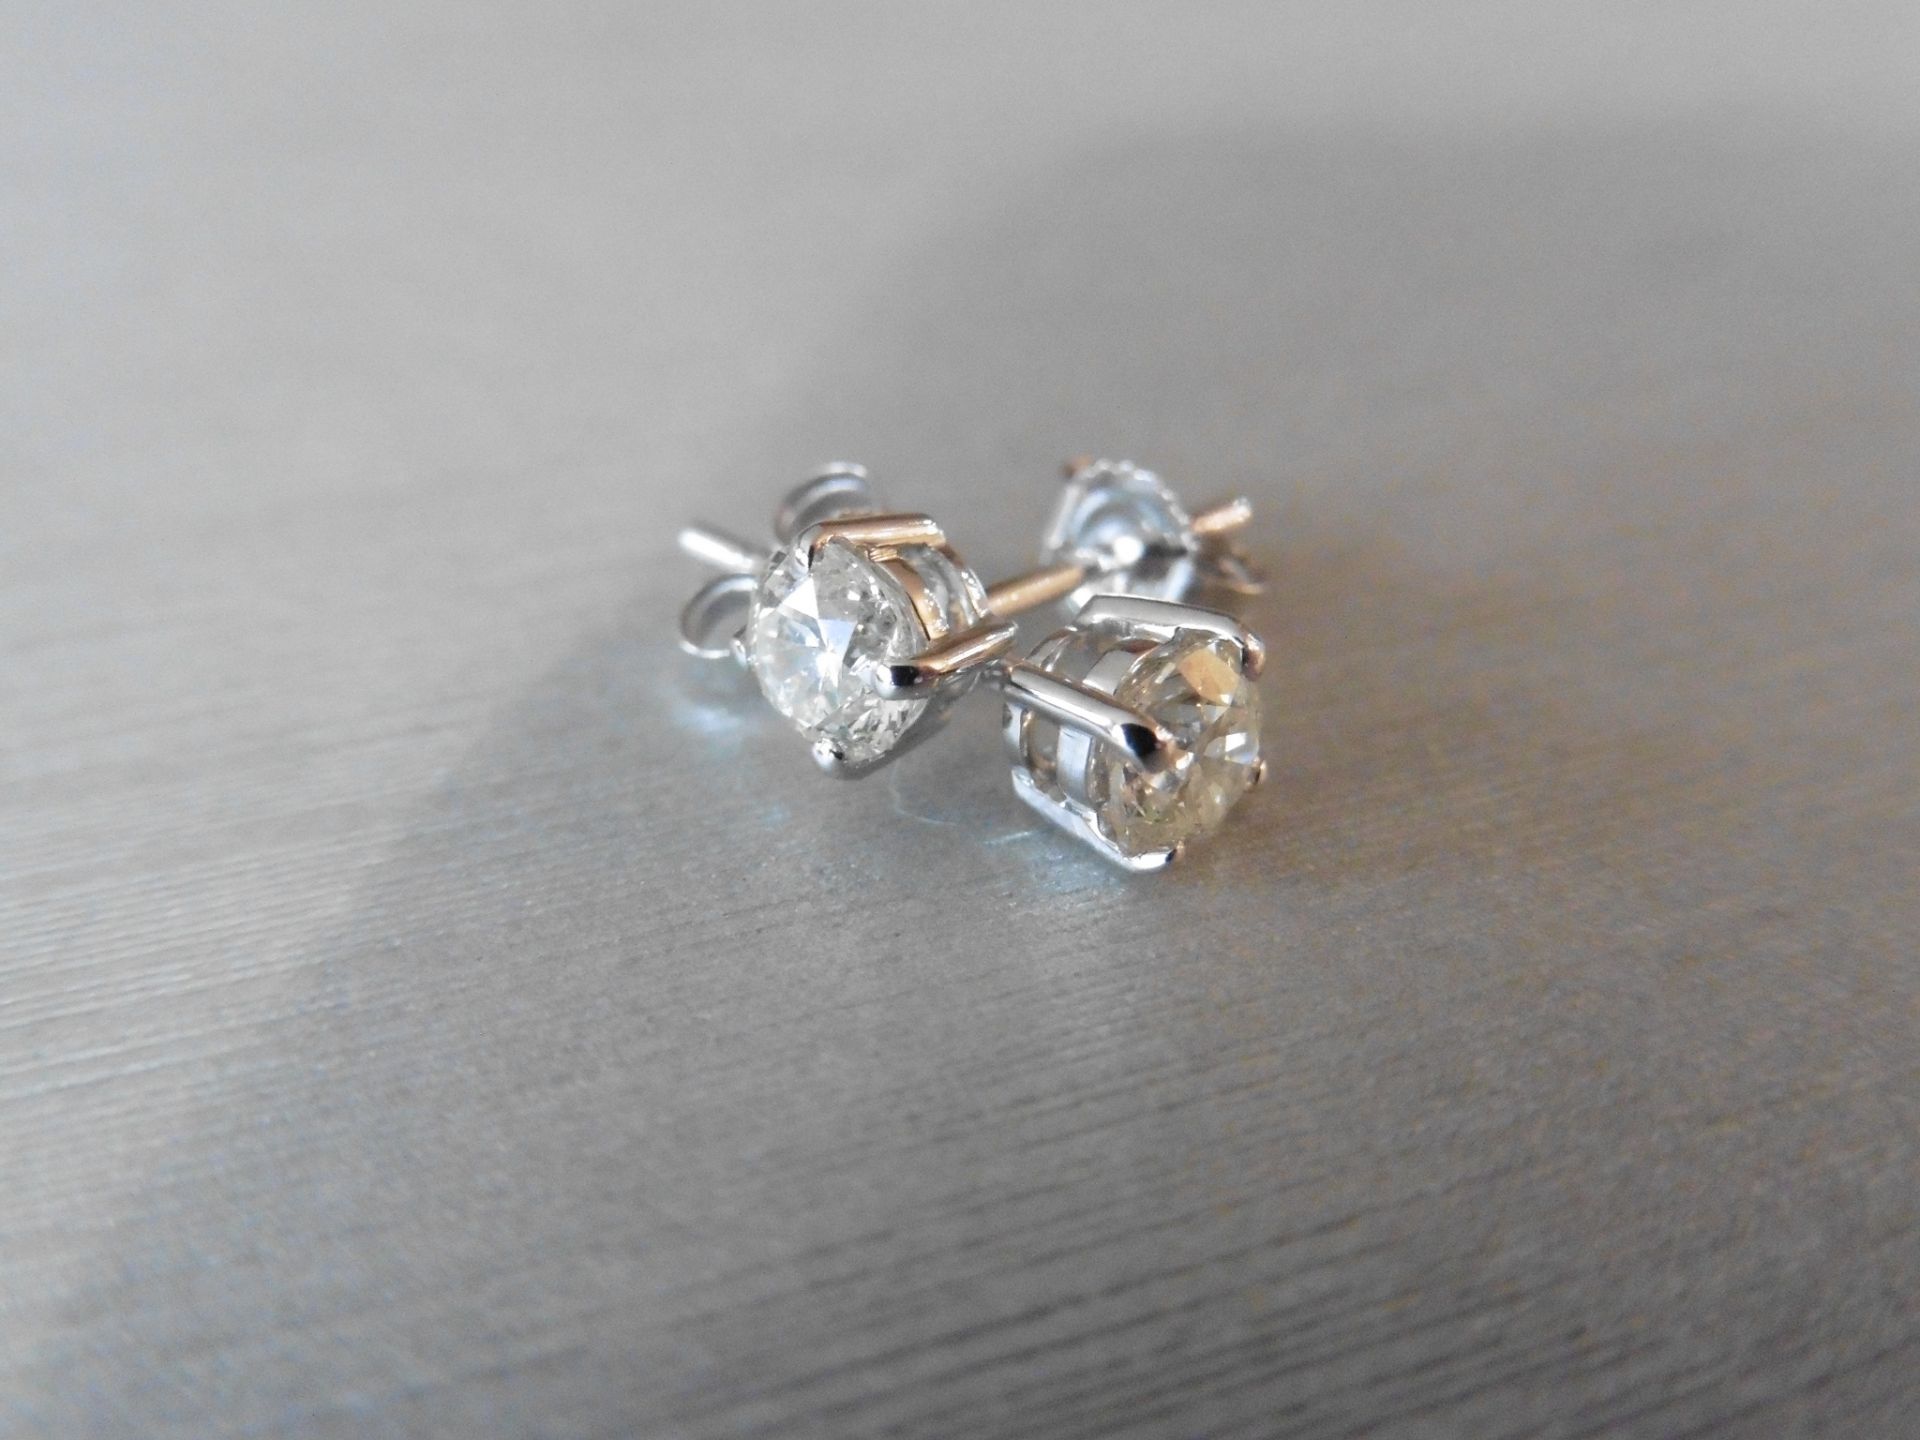 2.00Ct Diamond Solitaire Earrings Set With Brilliant Cut Diamonds, H Colour Si3 Clarity.